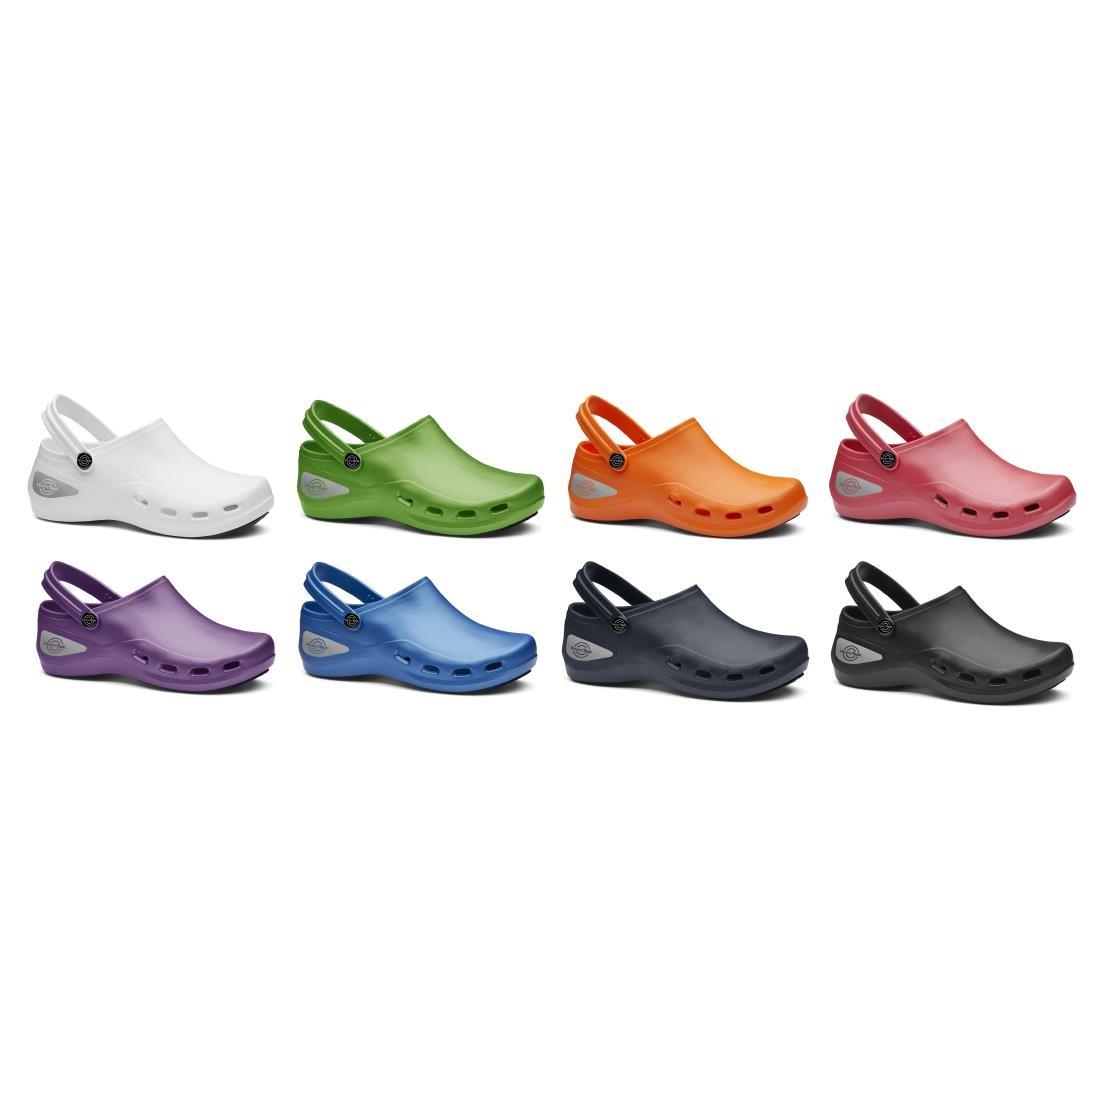 WearerTech Unisex Invigorate Black Safety Shoe Size 6 - BB195-39.5  - 7